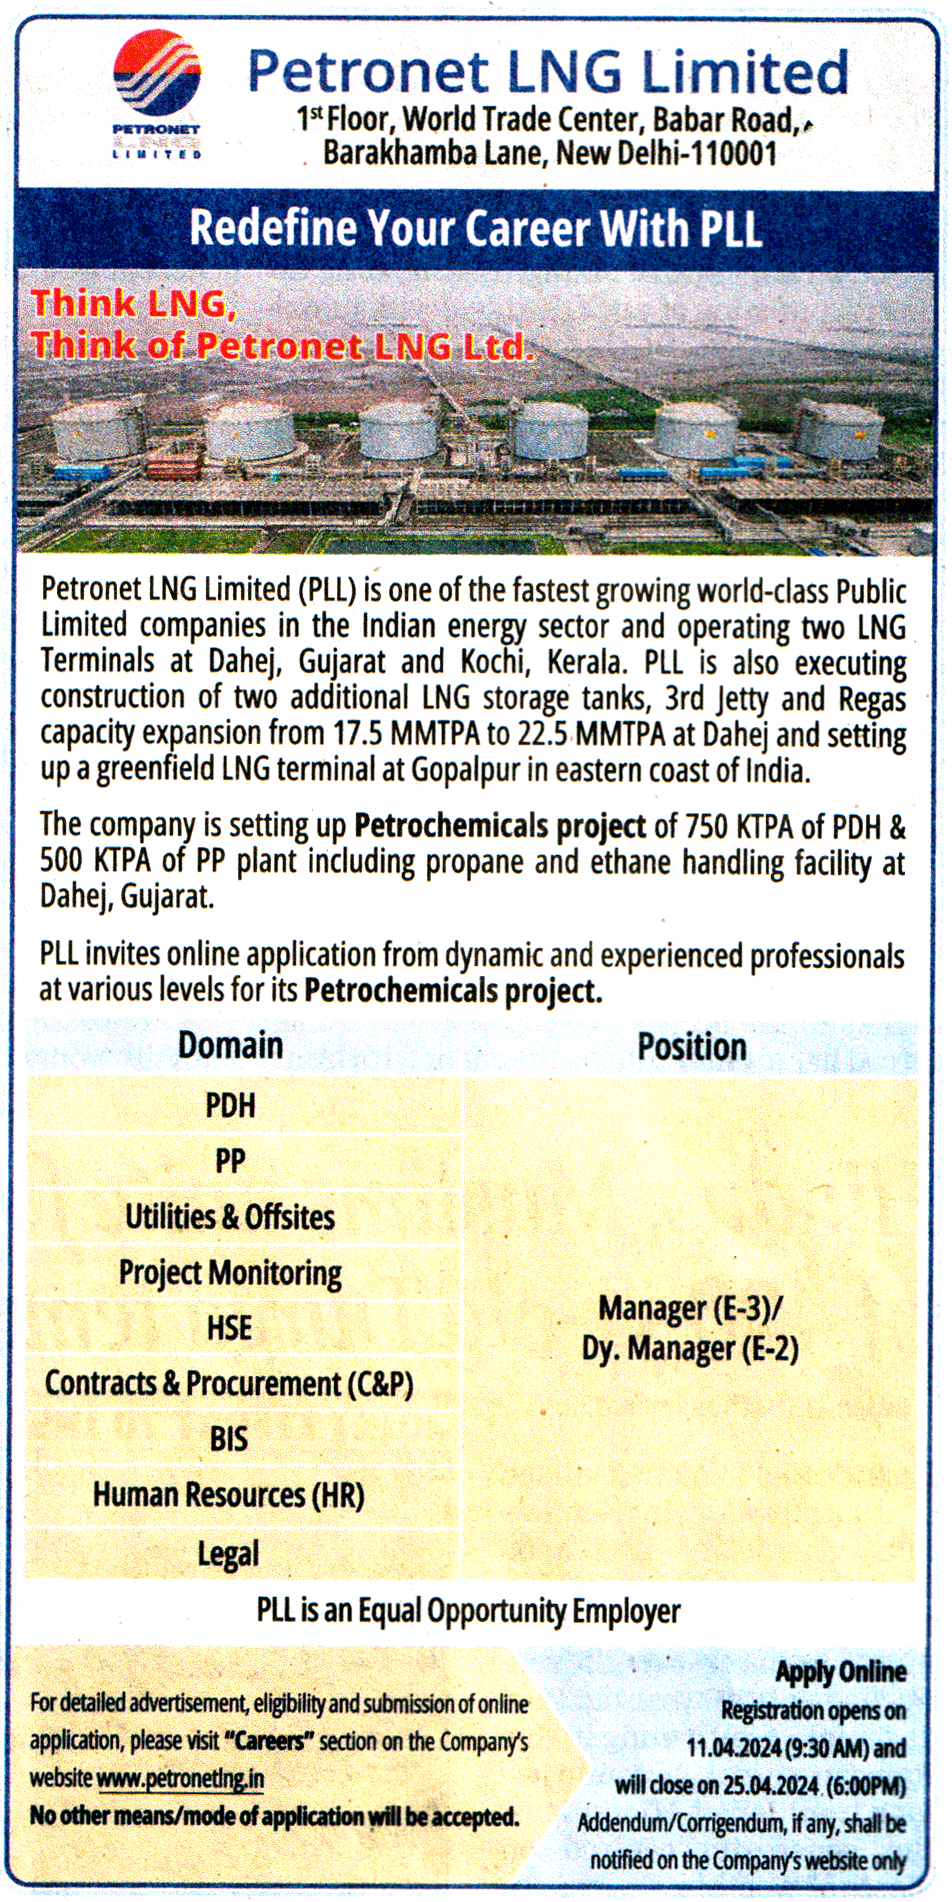 Petronet LNG Limited New Delhi Recruitment